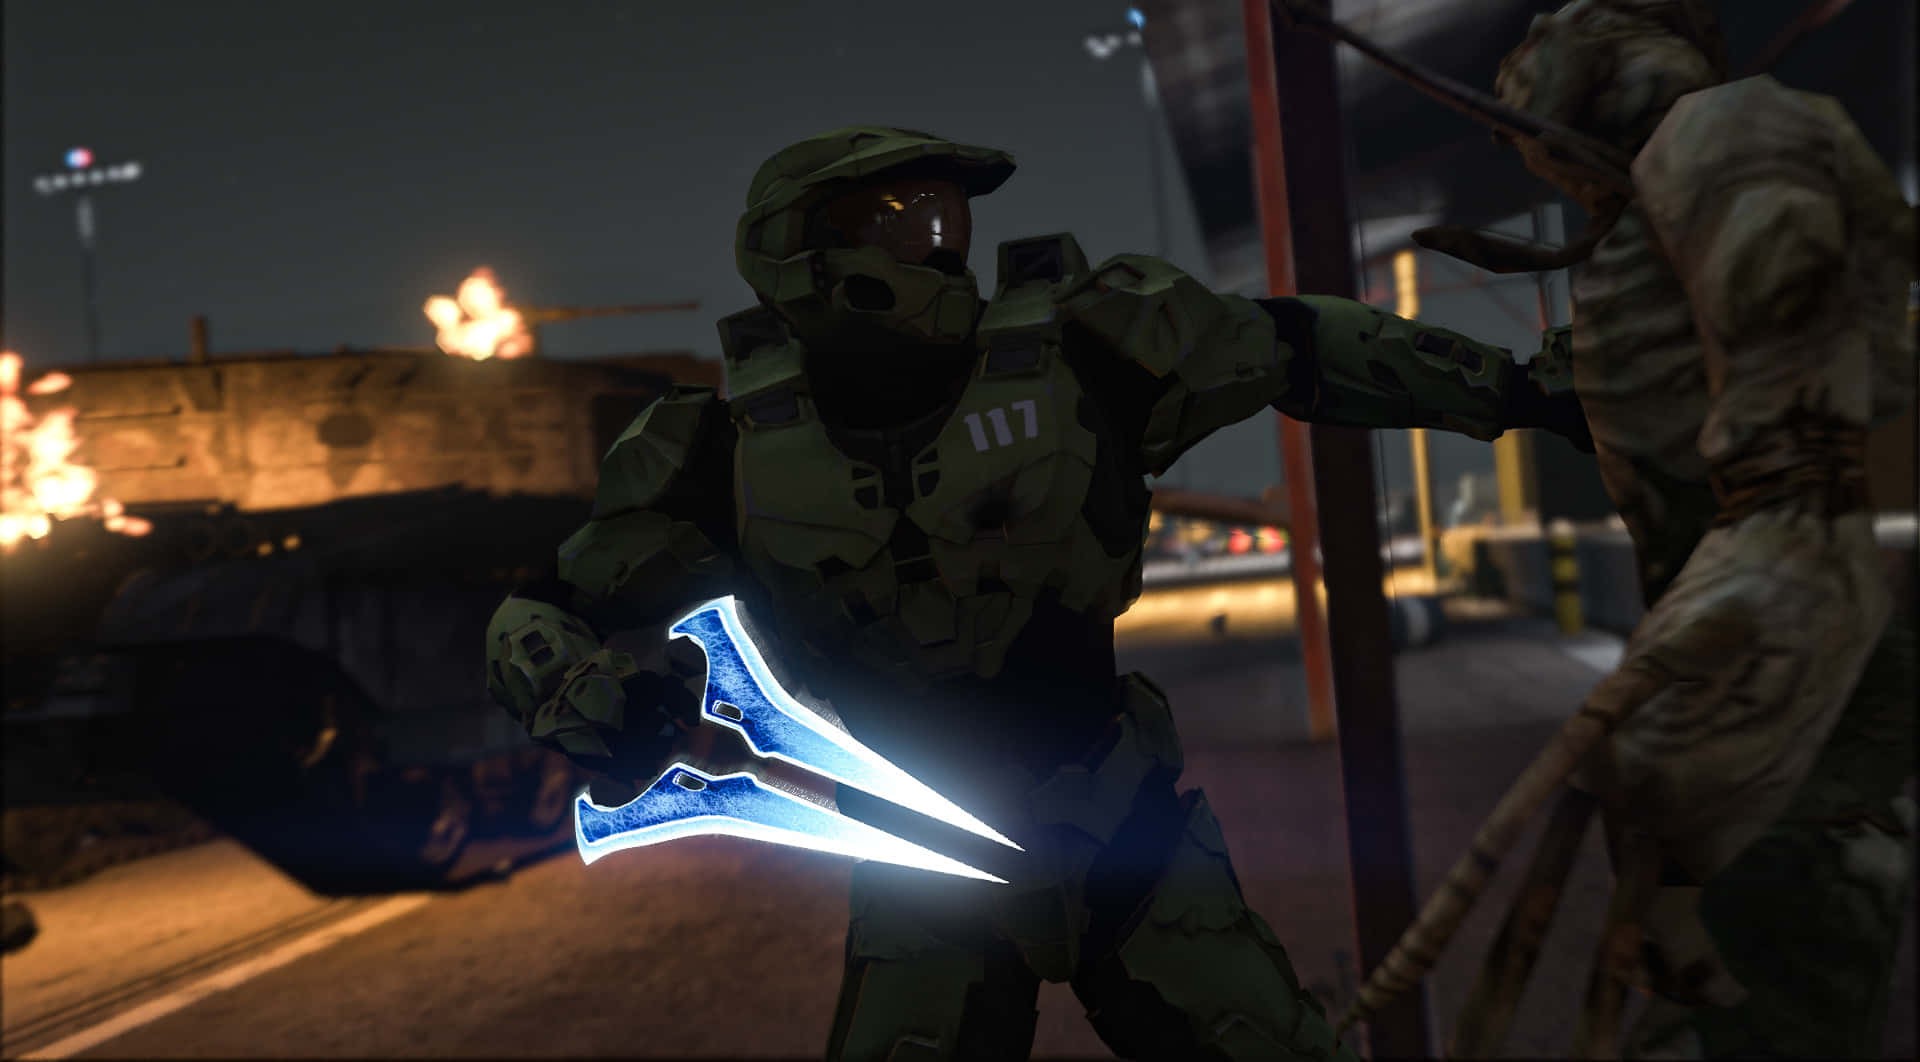 Halo Energy Sword Glowing in Action Wallpaper